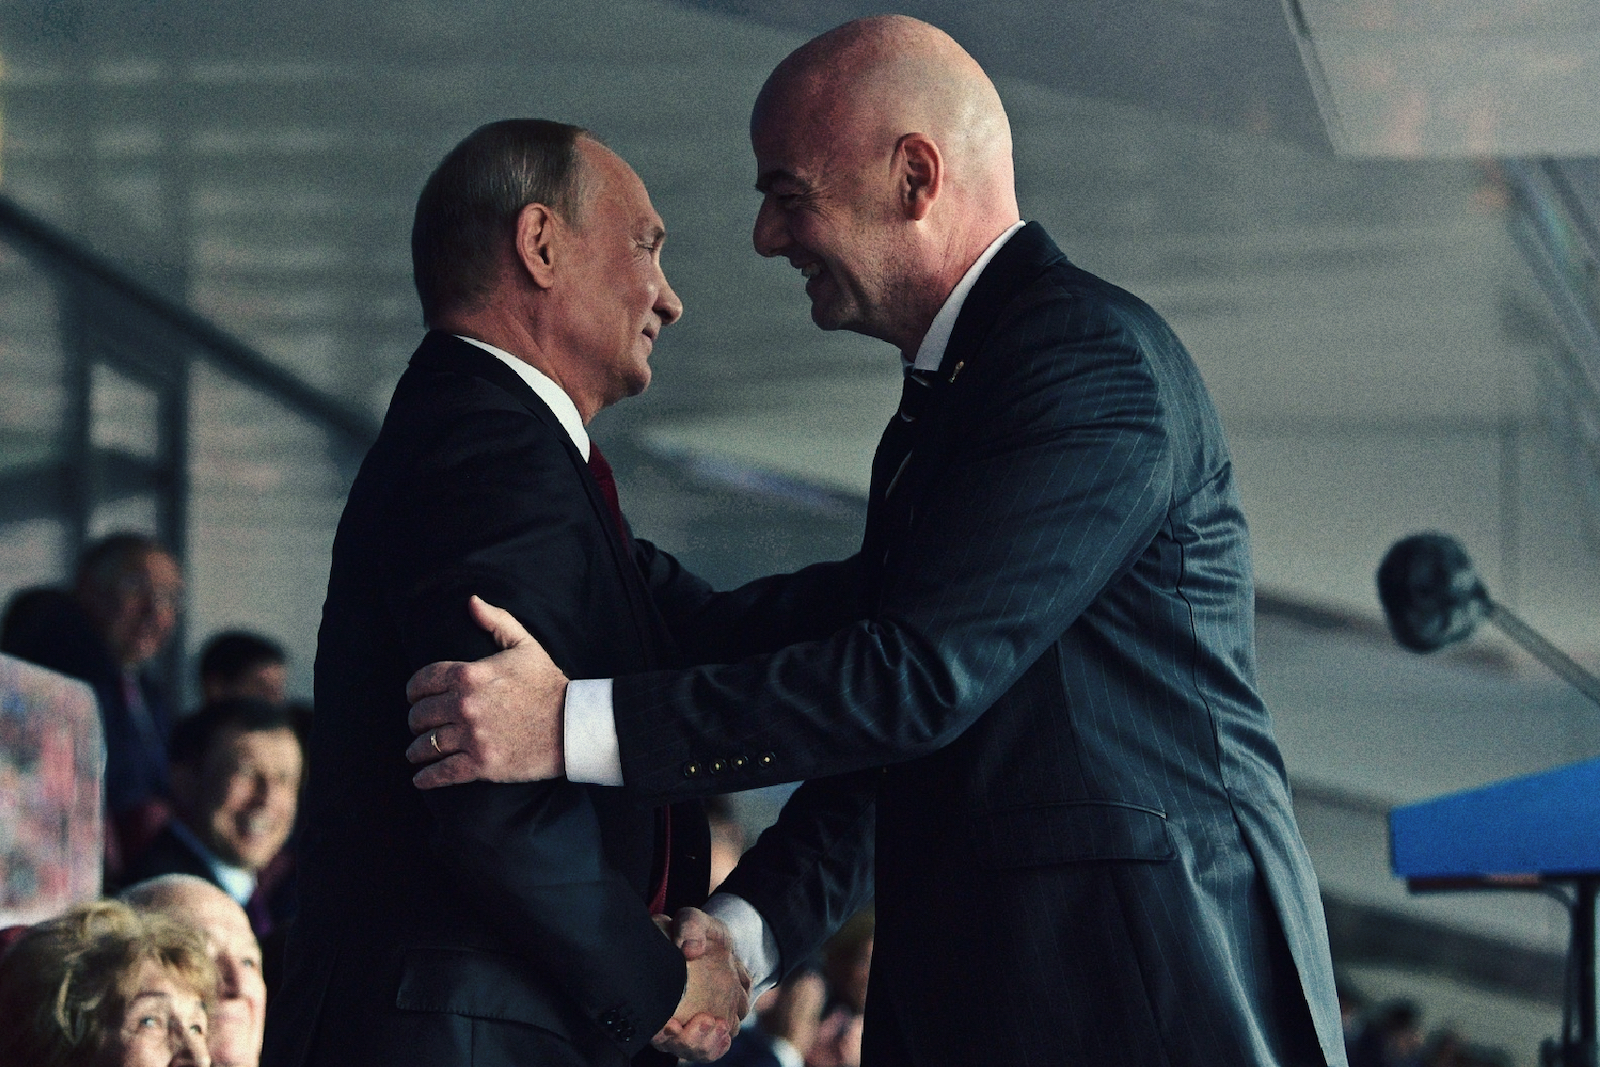 Gianni Infantino embraces Vladimir Putin